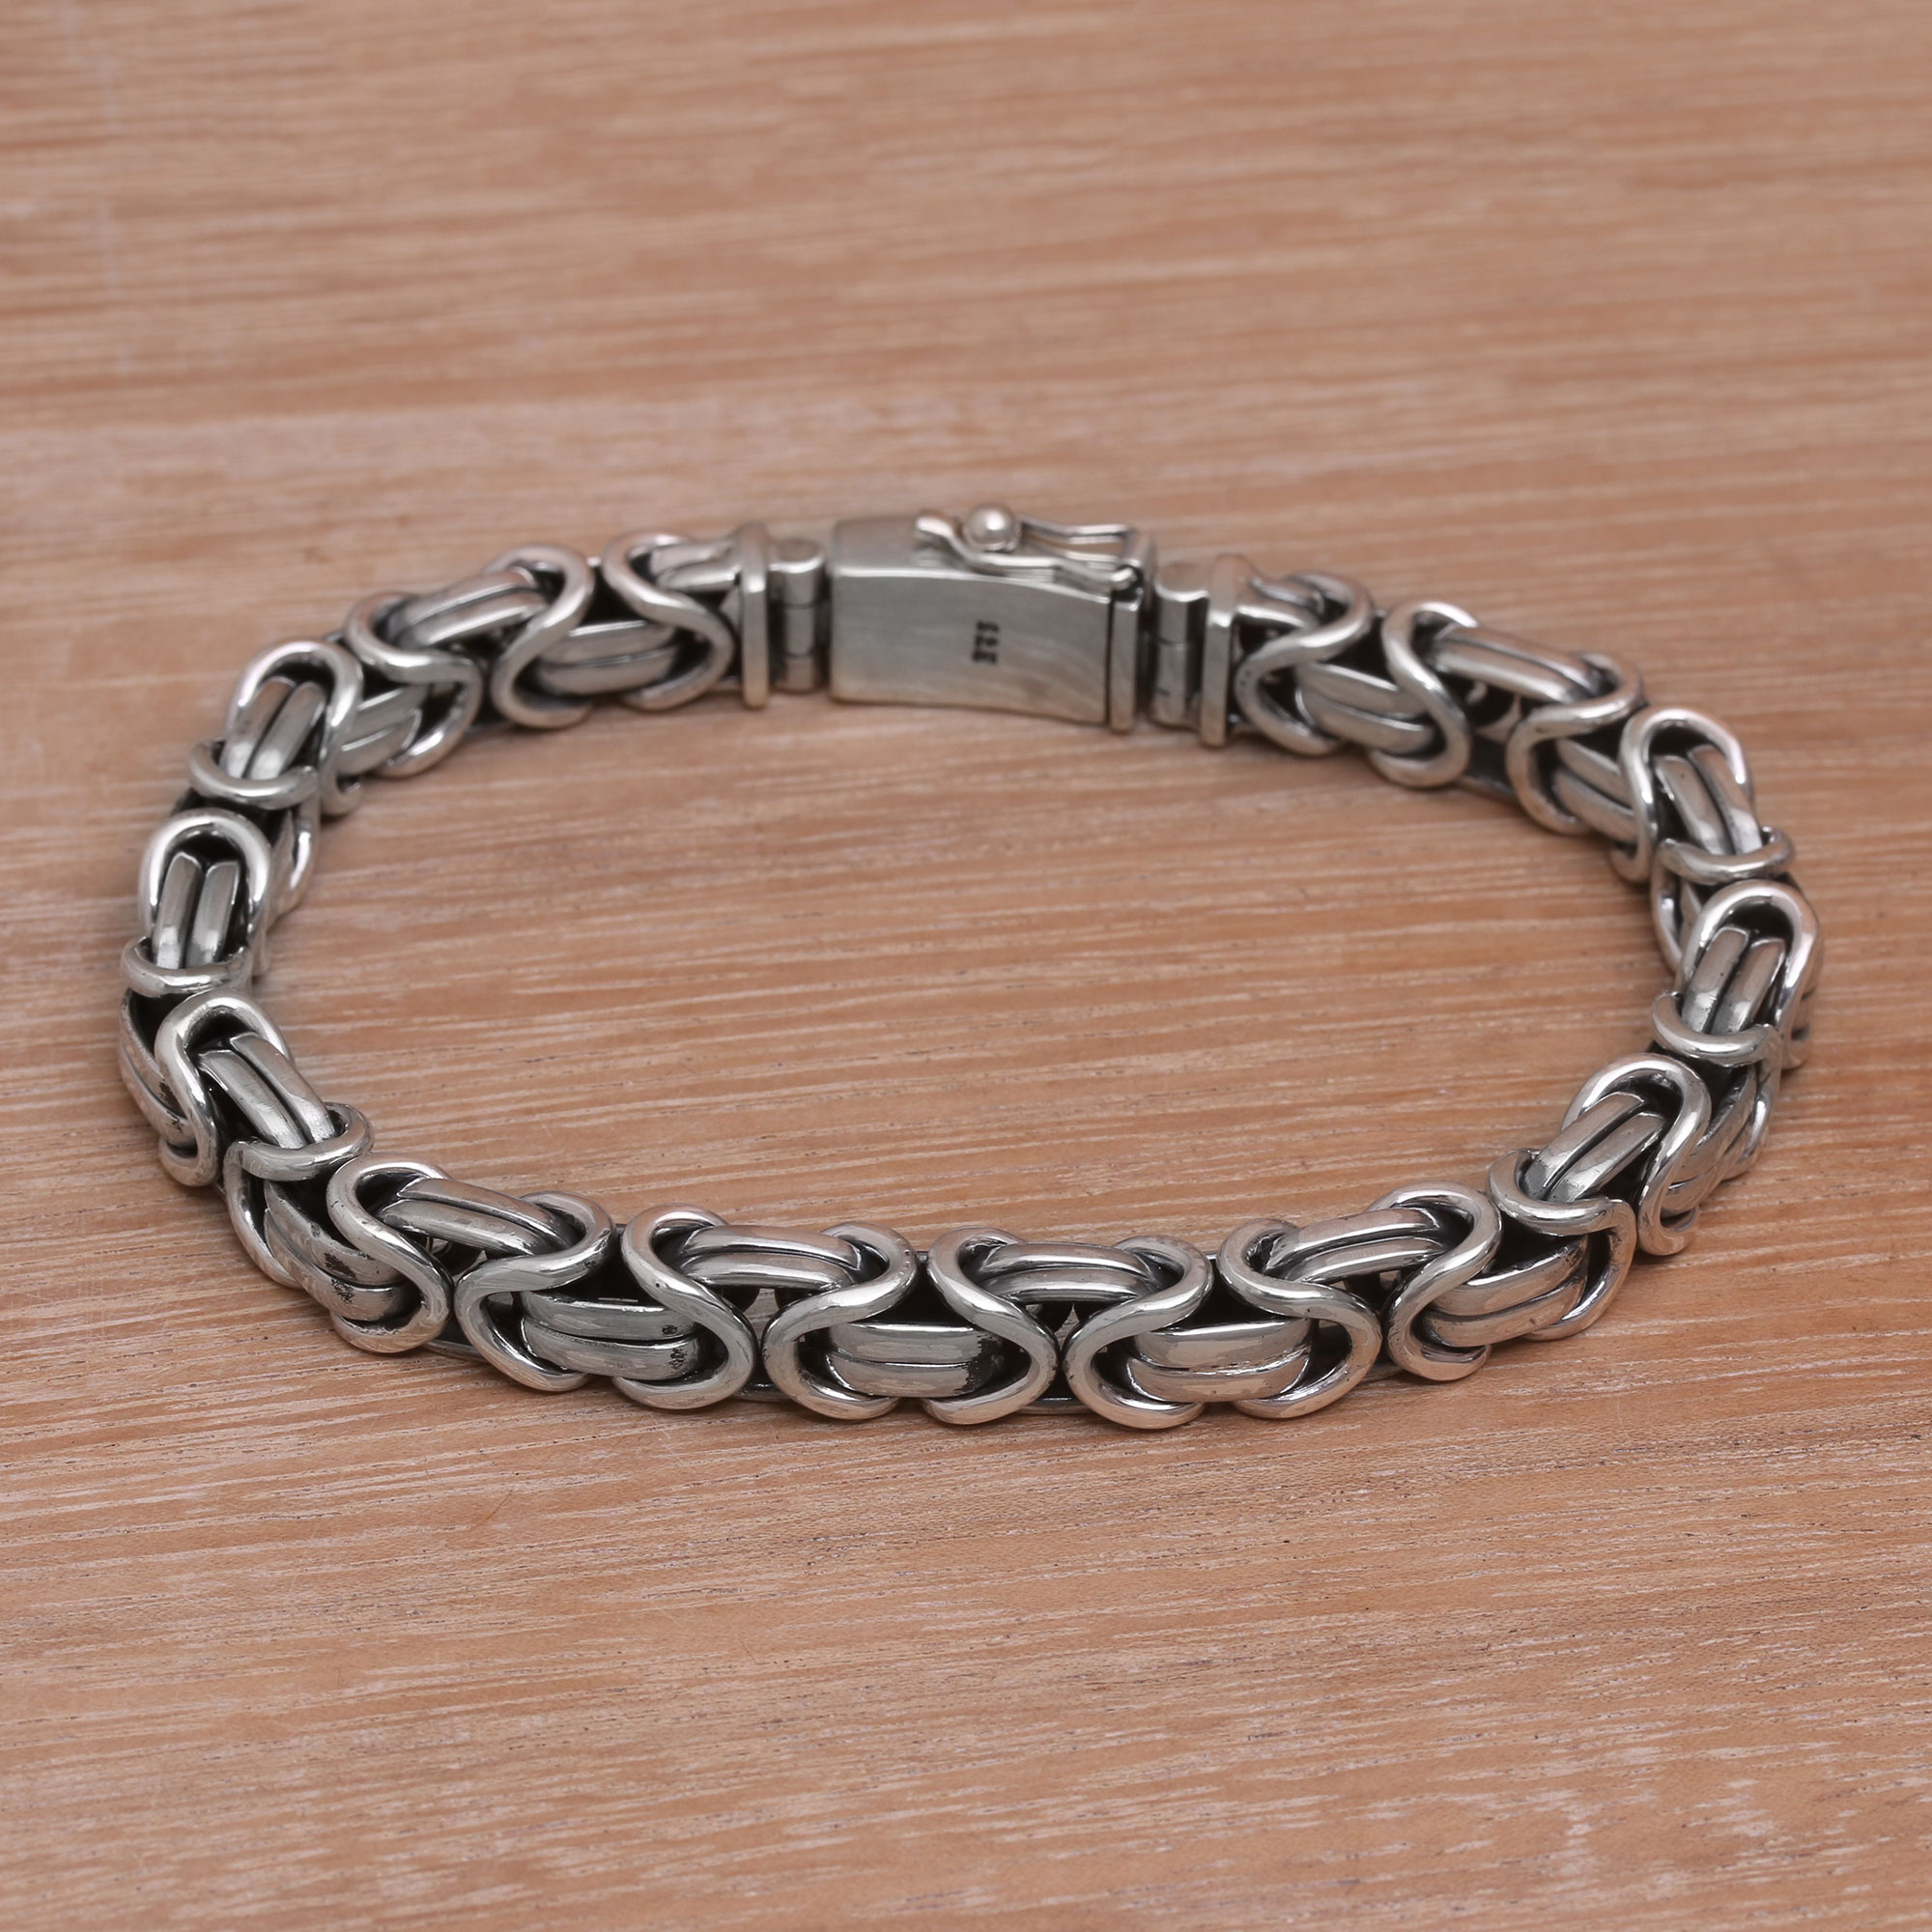 7SB-159 Solid Sterling Silver Oxidized Byzantine Bali Chain Men Bracelet